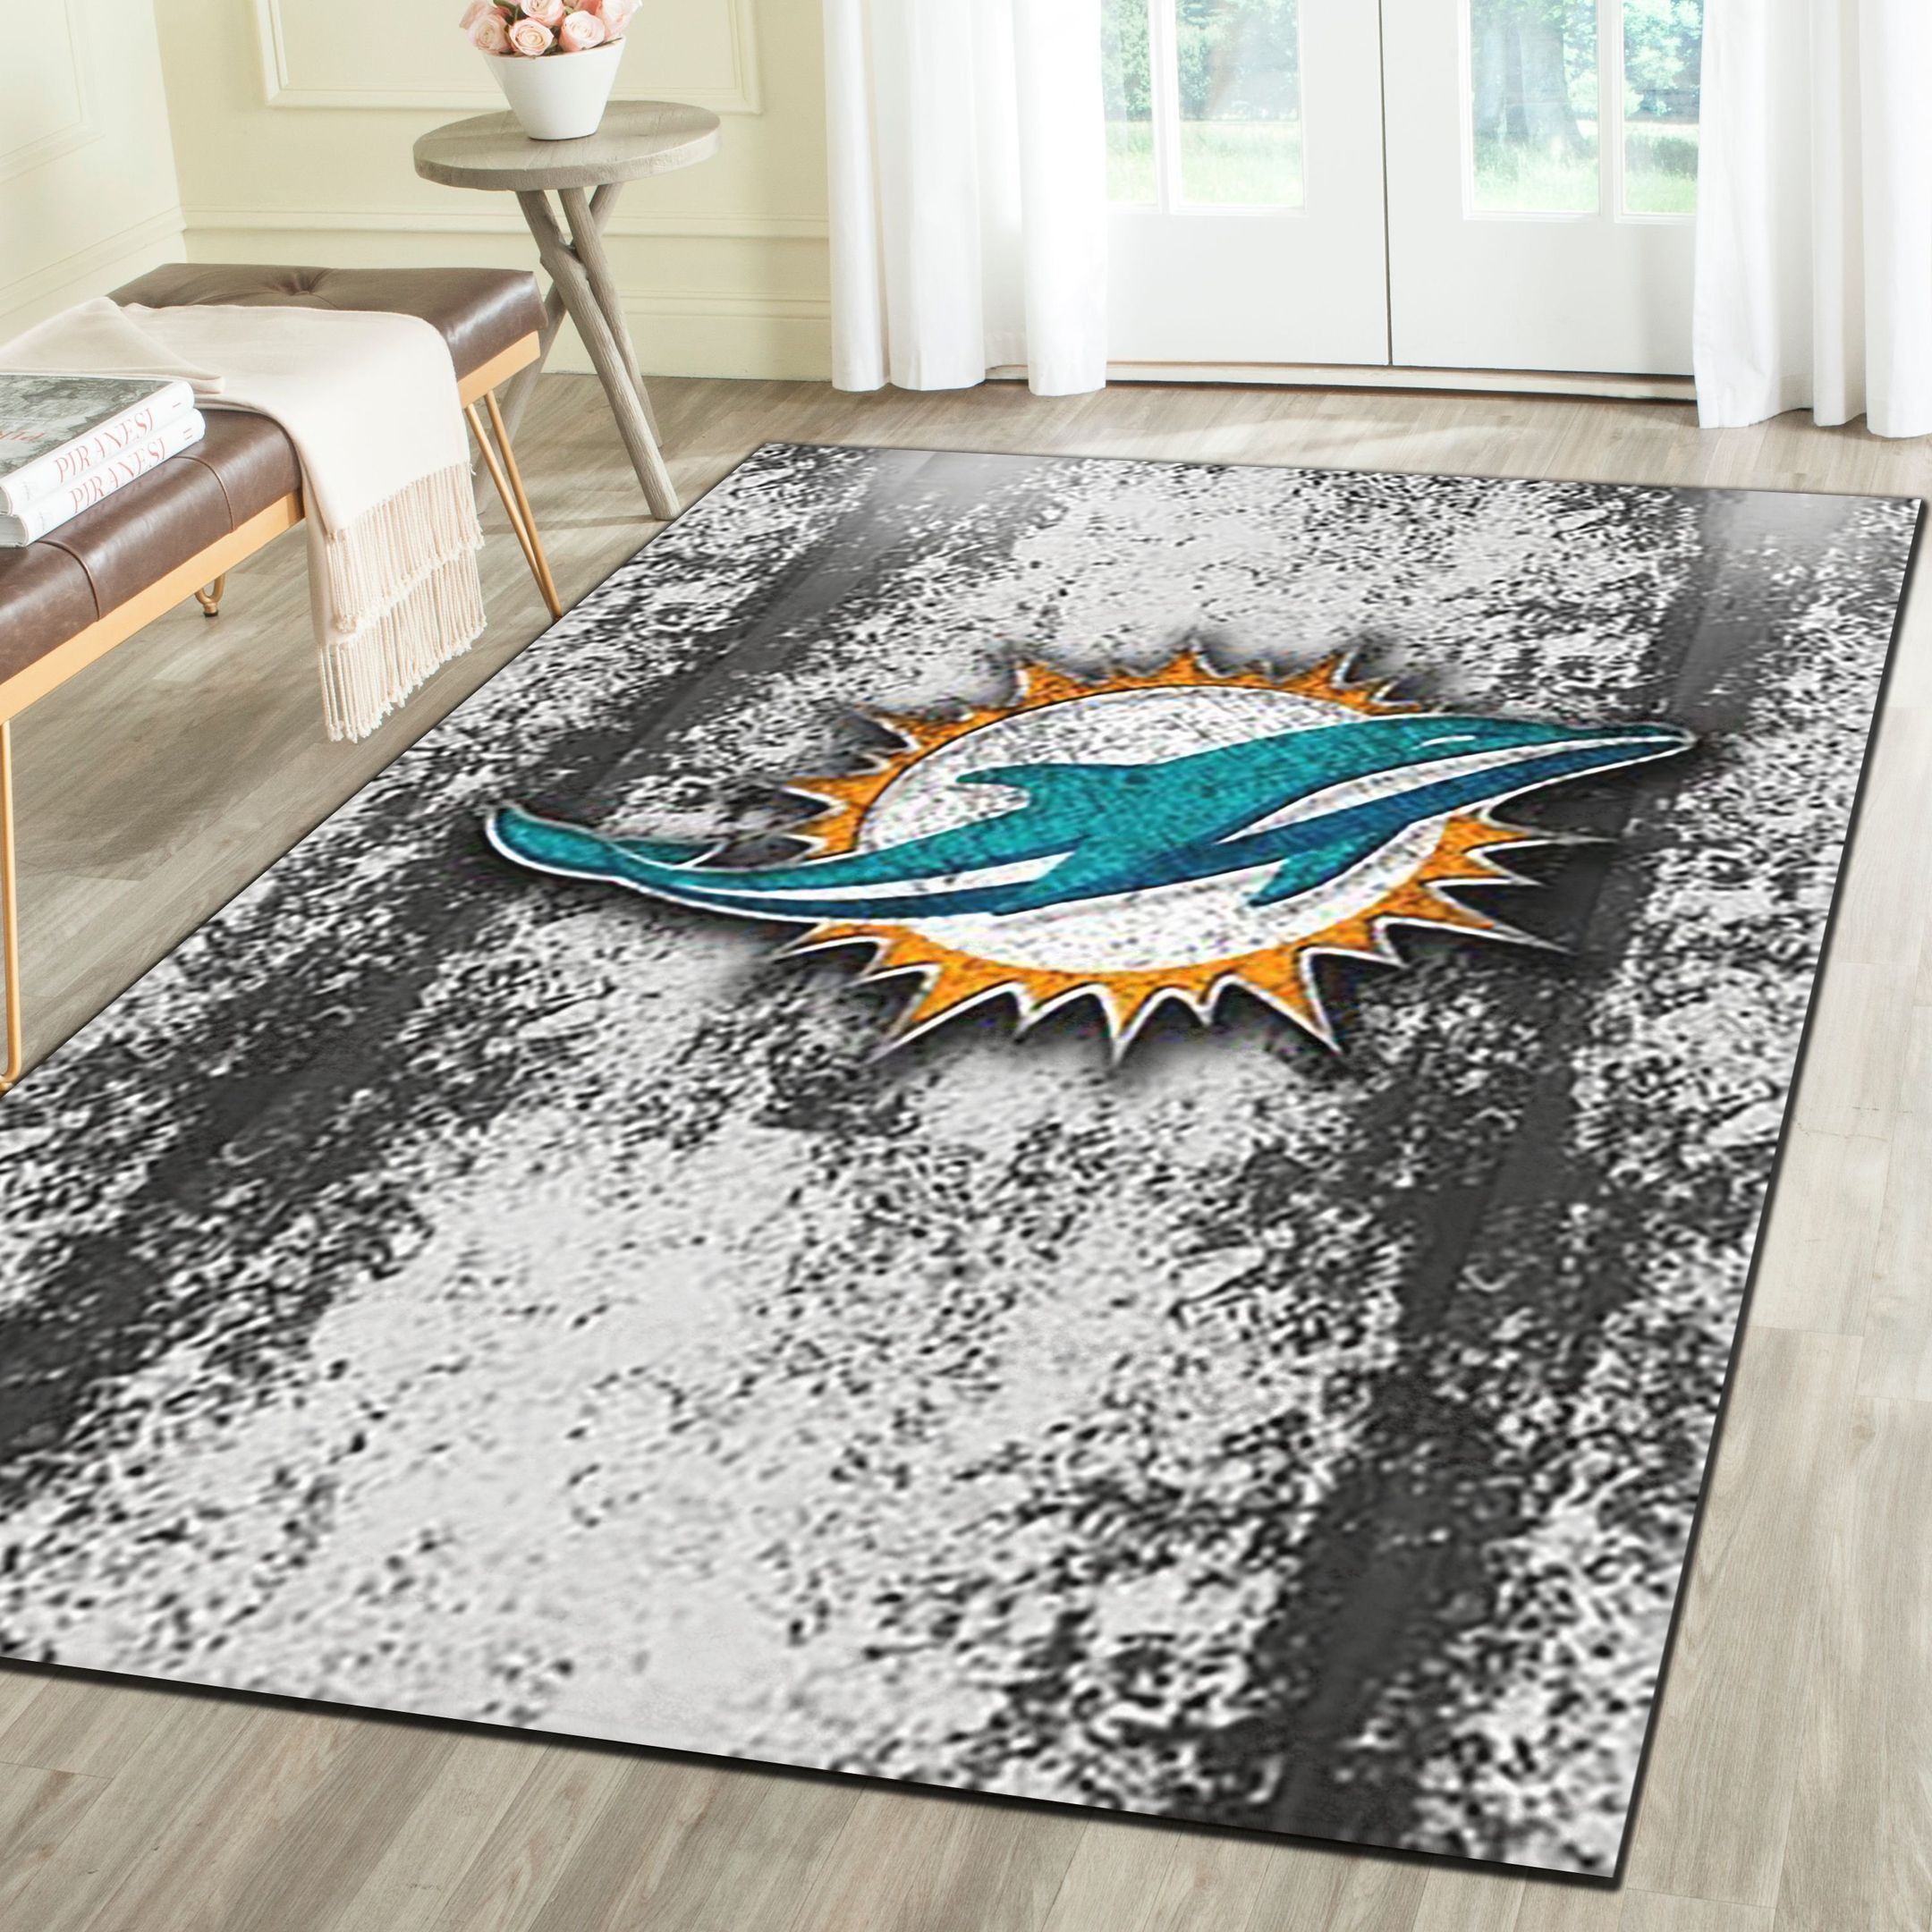 Miami Dolphins Area Rugs, Football Team Living Room Bedroom Carpet, Sports Floor Mat Home Decor